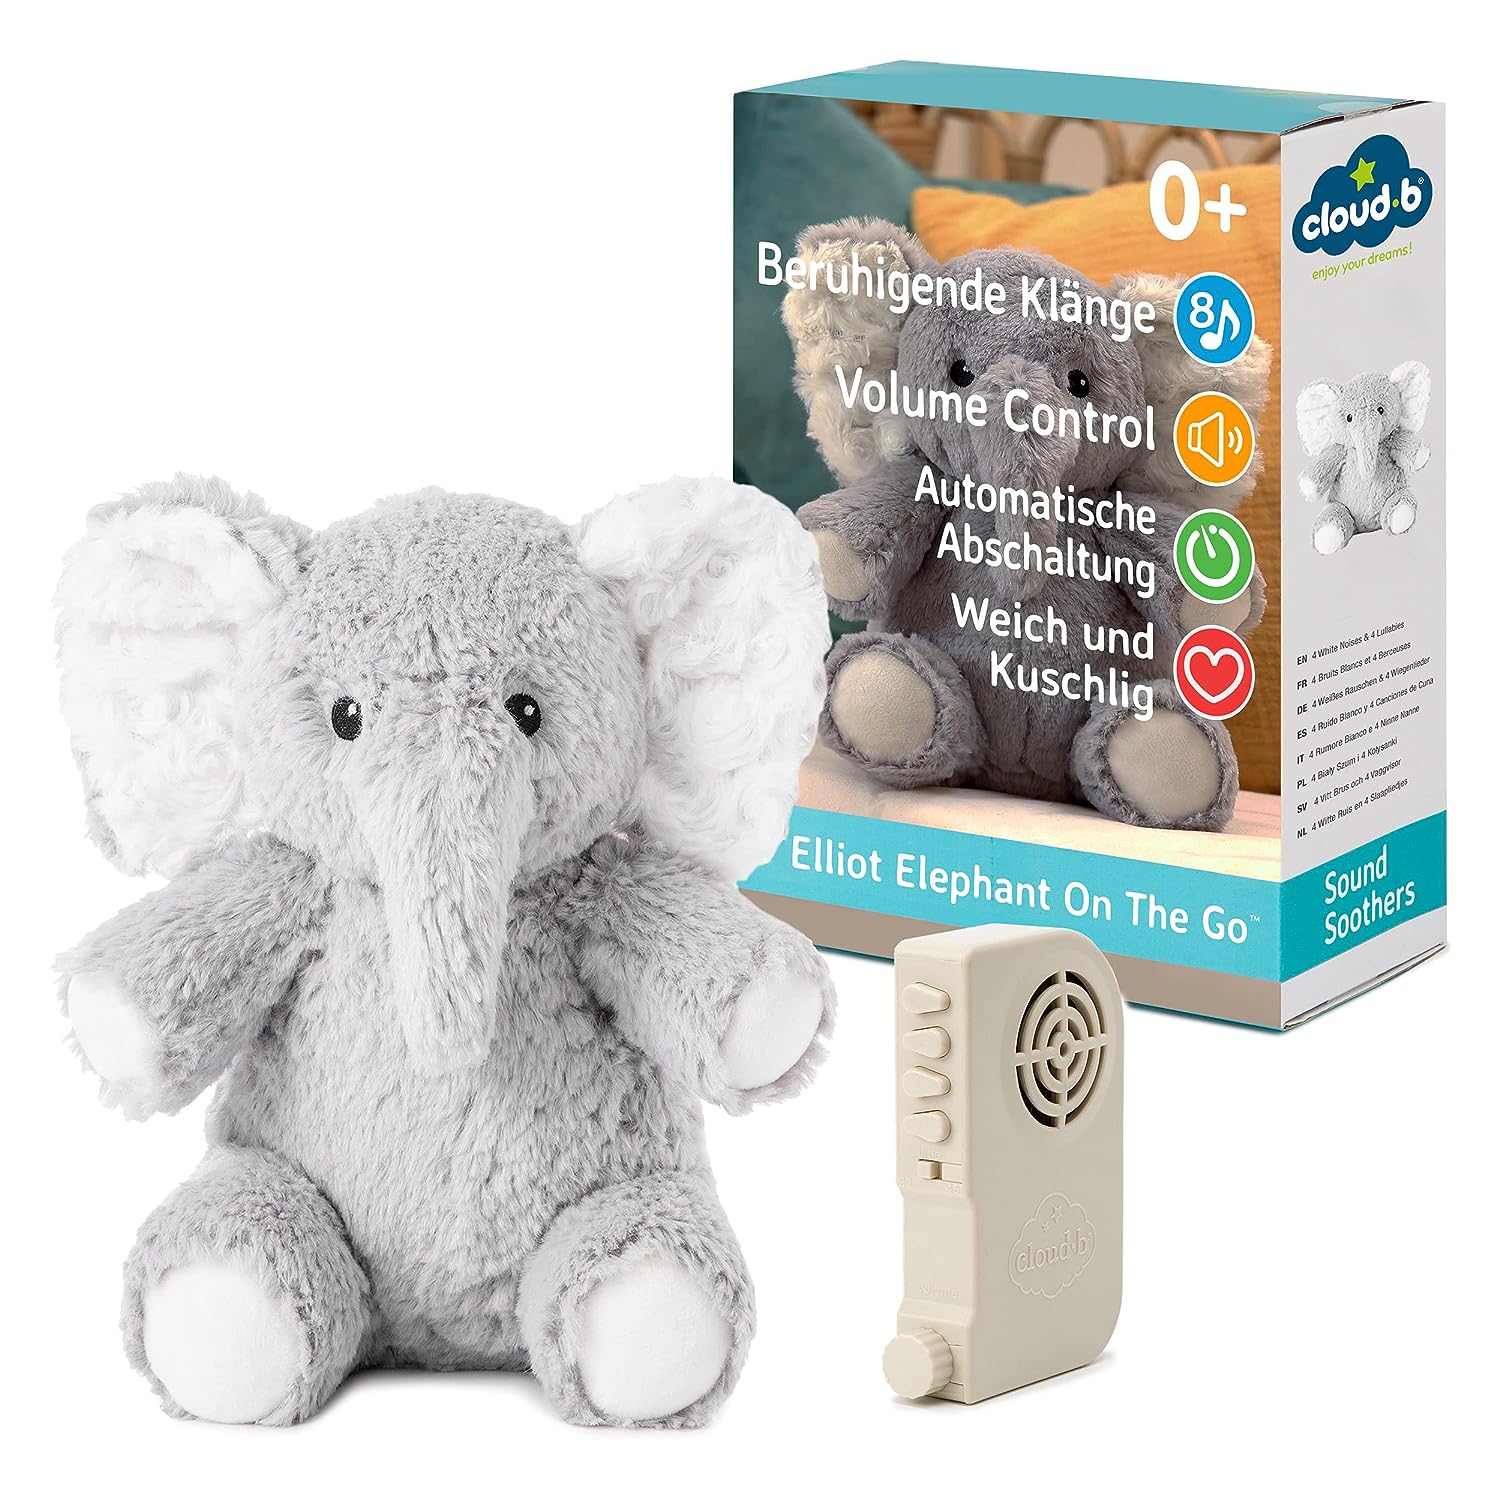 Elliot-Elefant-on-the-Go-Einschlafhilfe-cloud-b-berlindeluxe-elefant-box